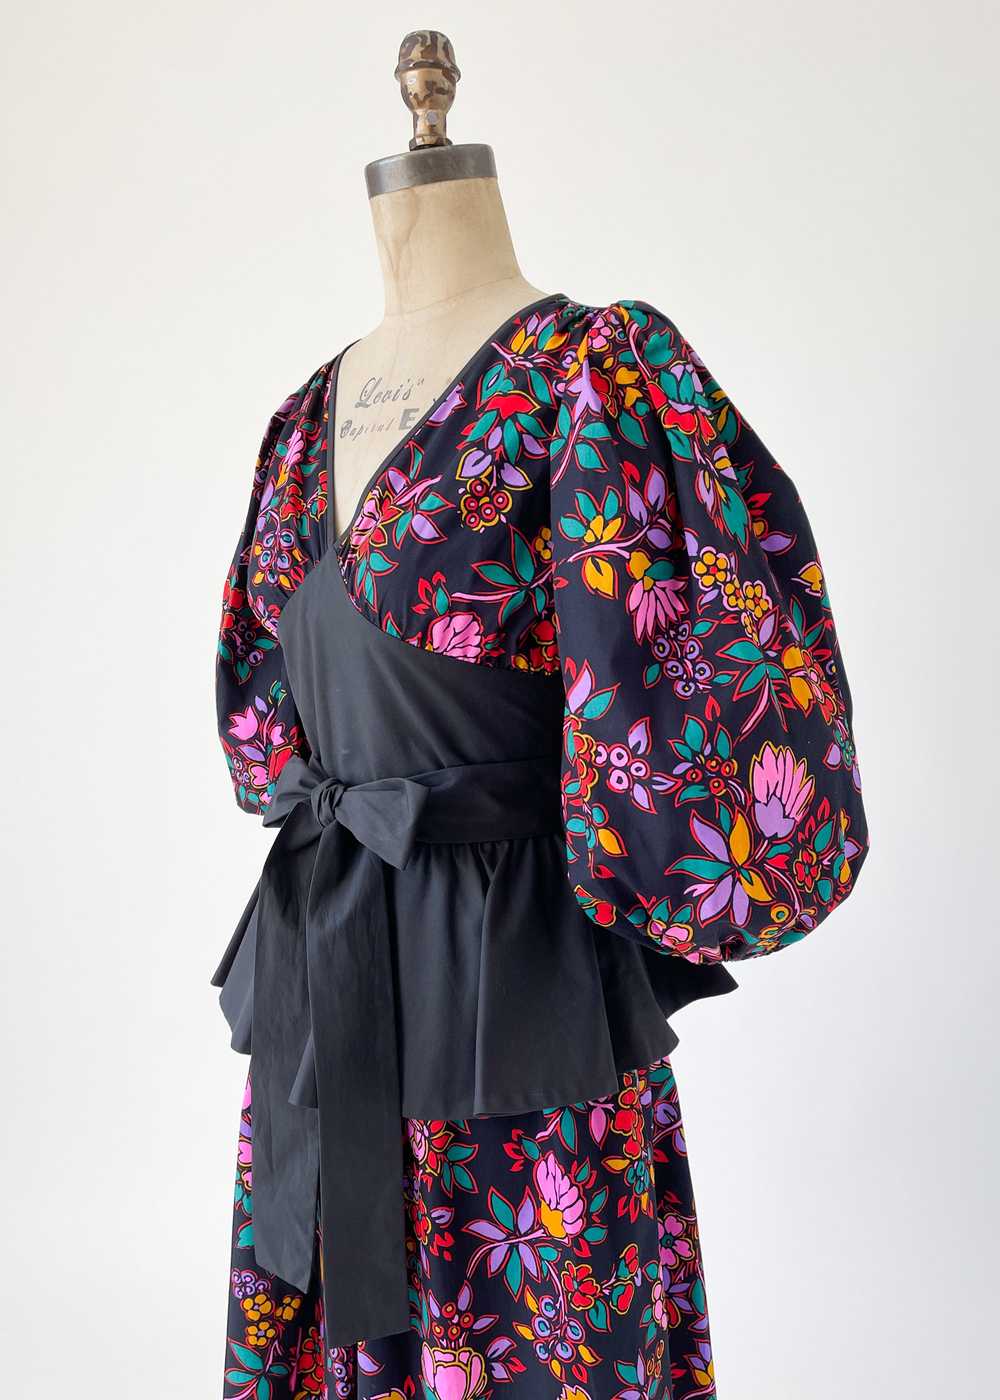 Vintage Early 1980s YSL Cotton Peplum Dress - image 3